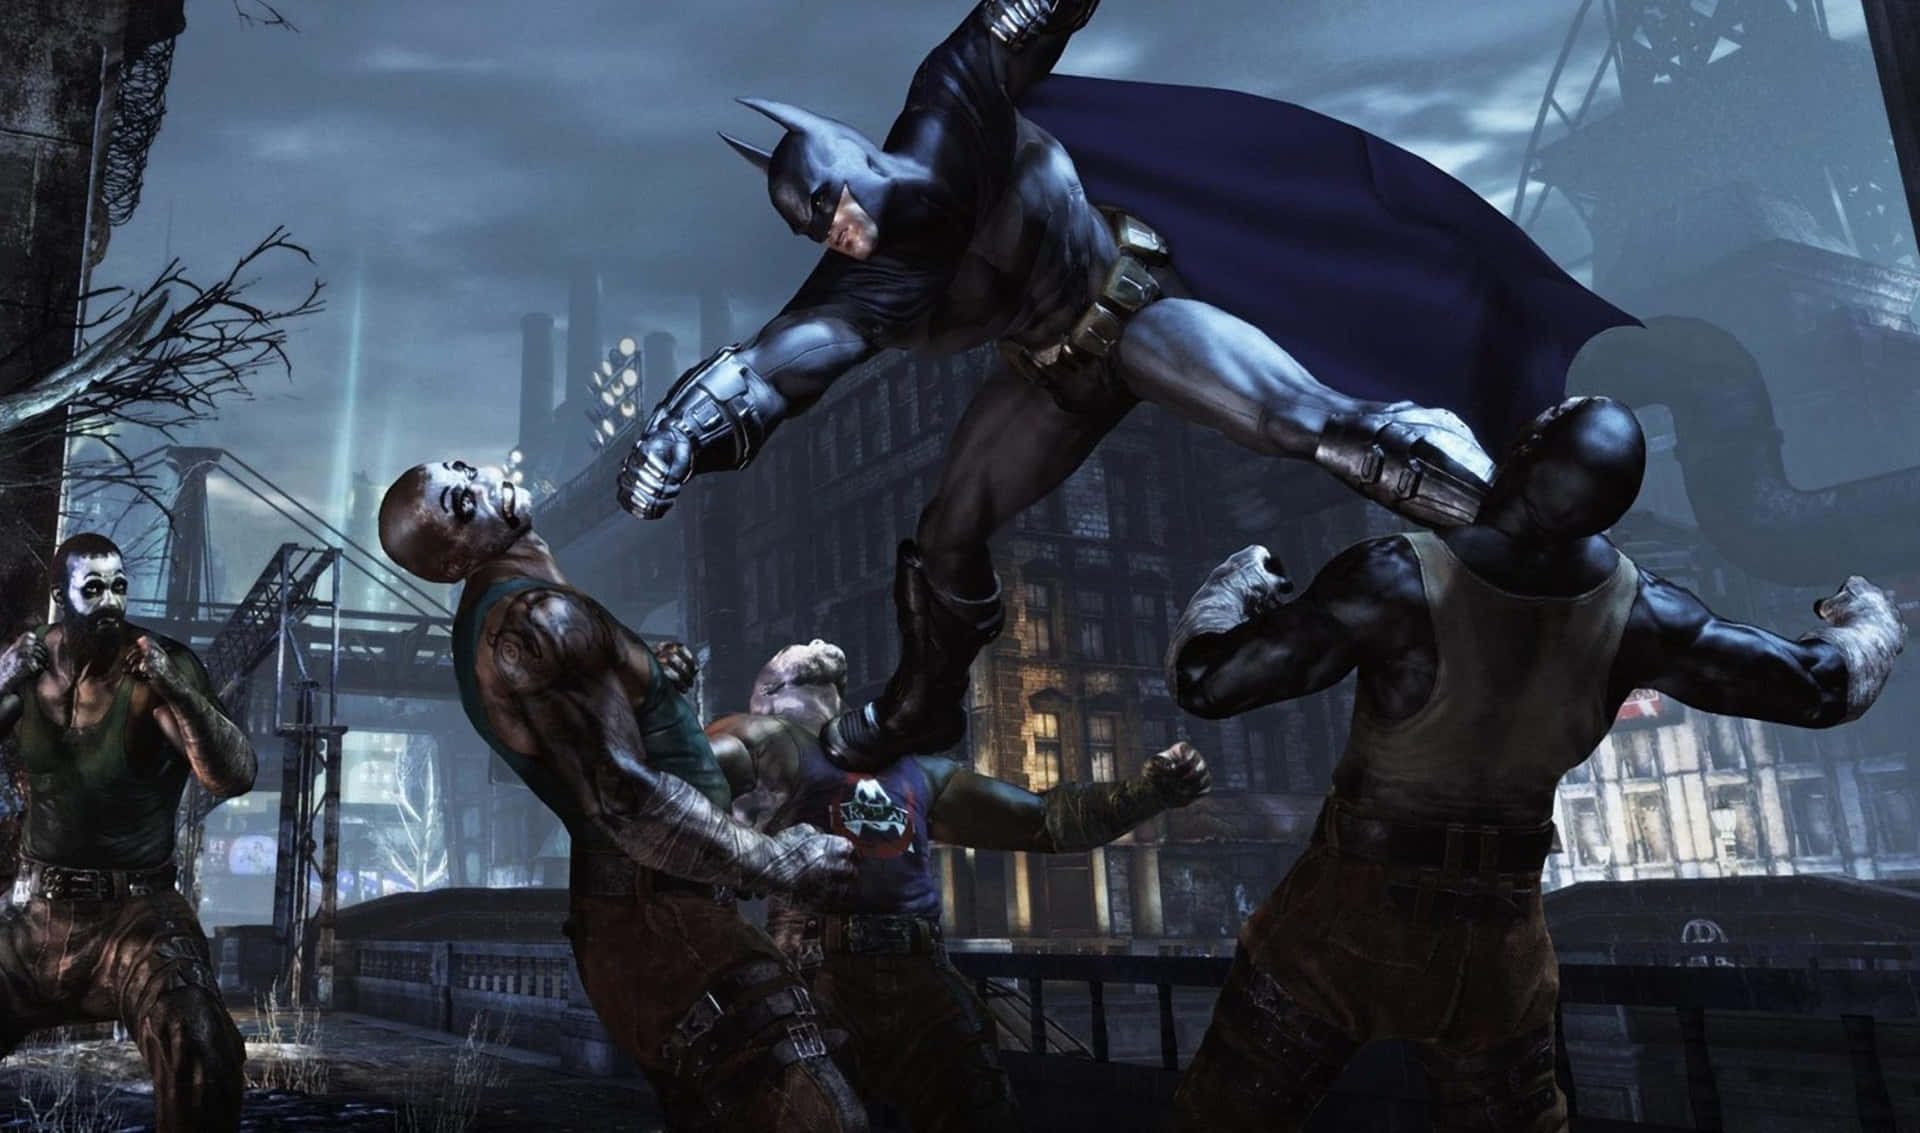 Batman Arkham City at nighttime